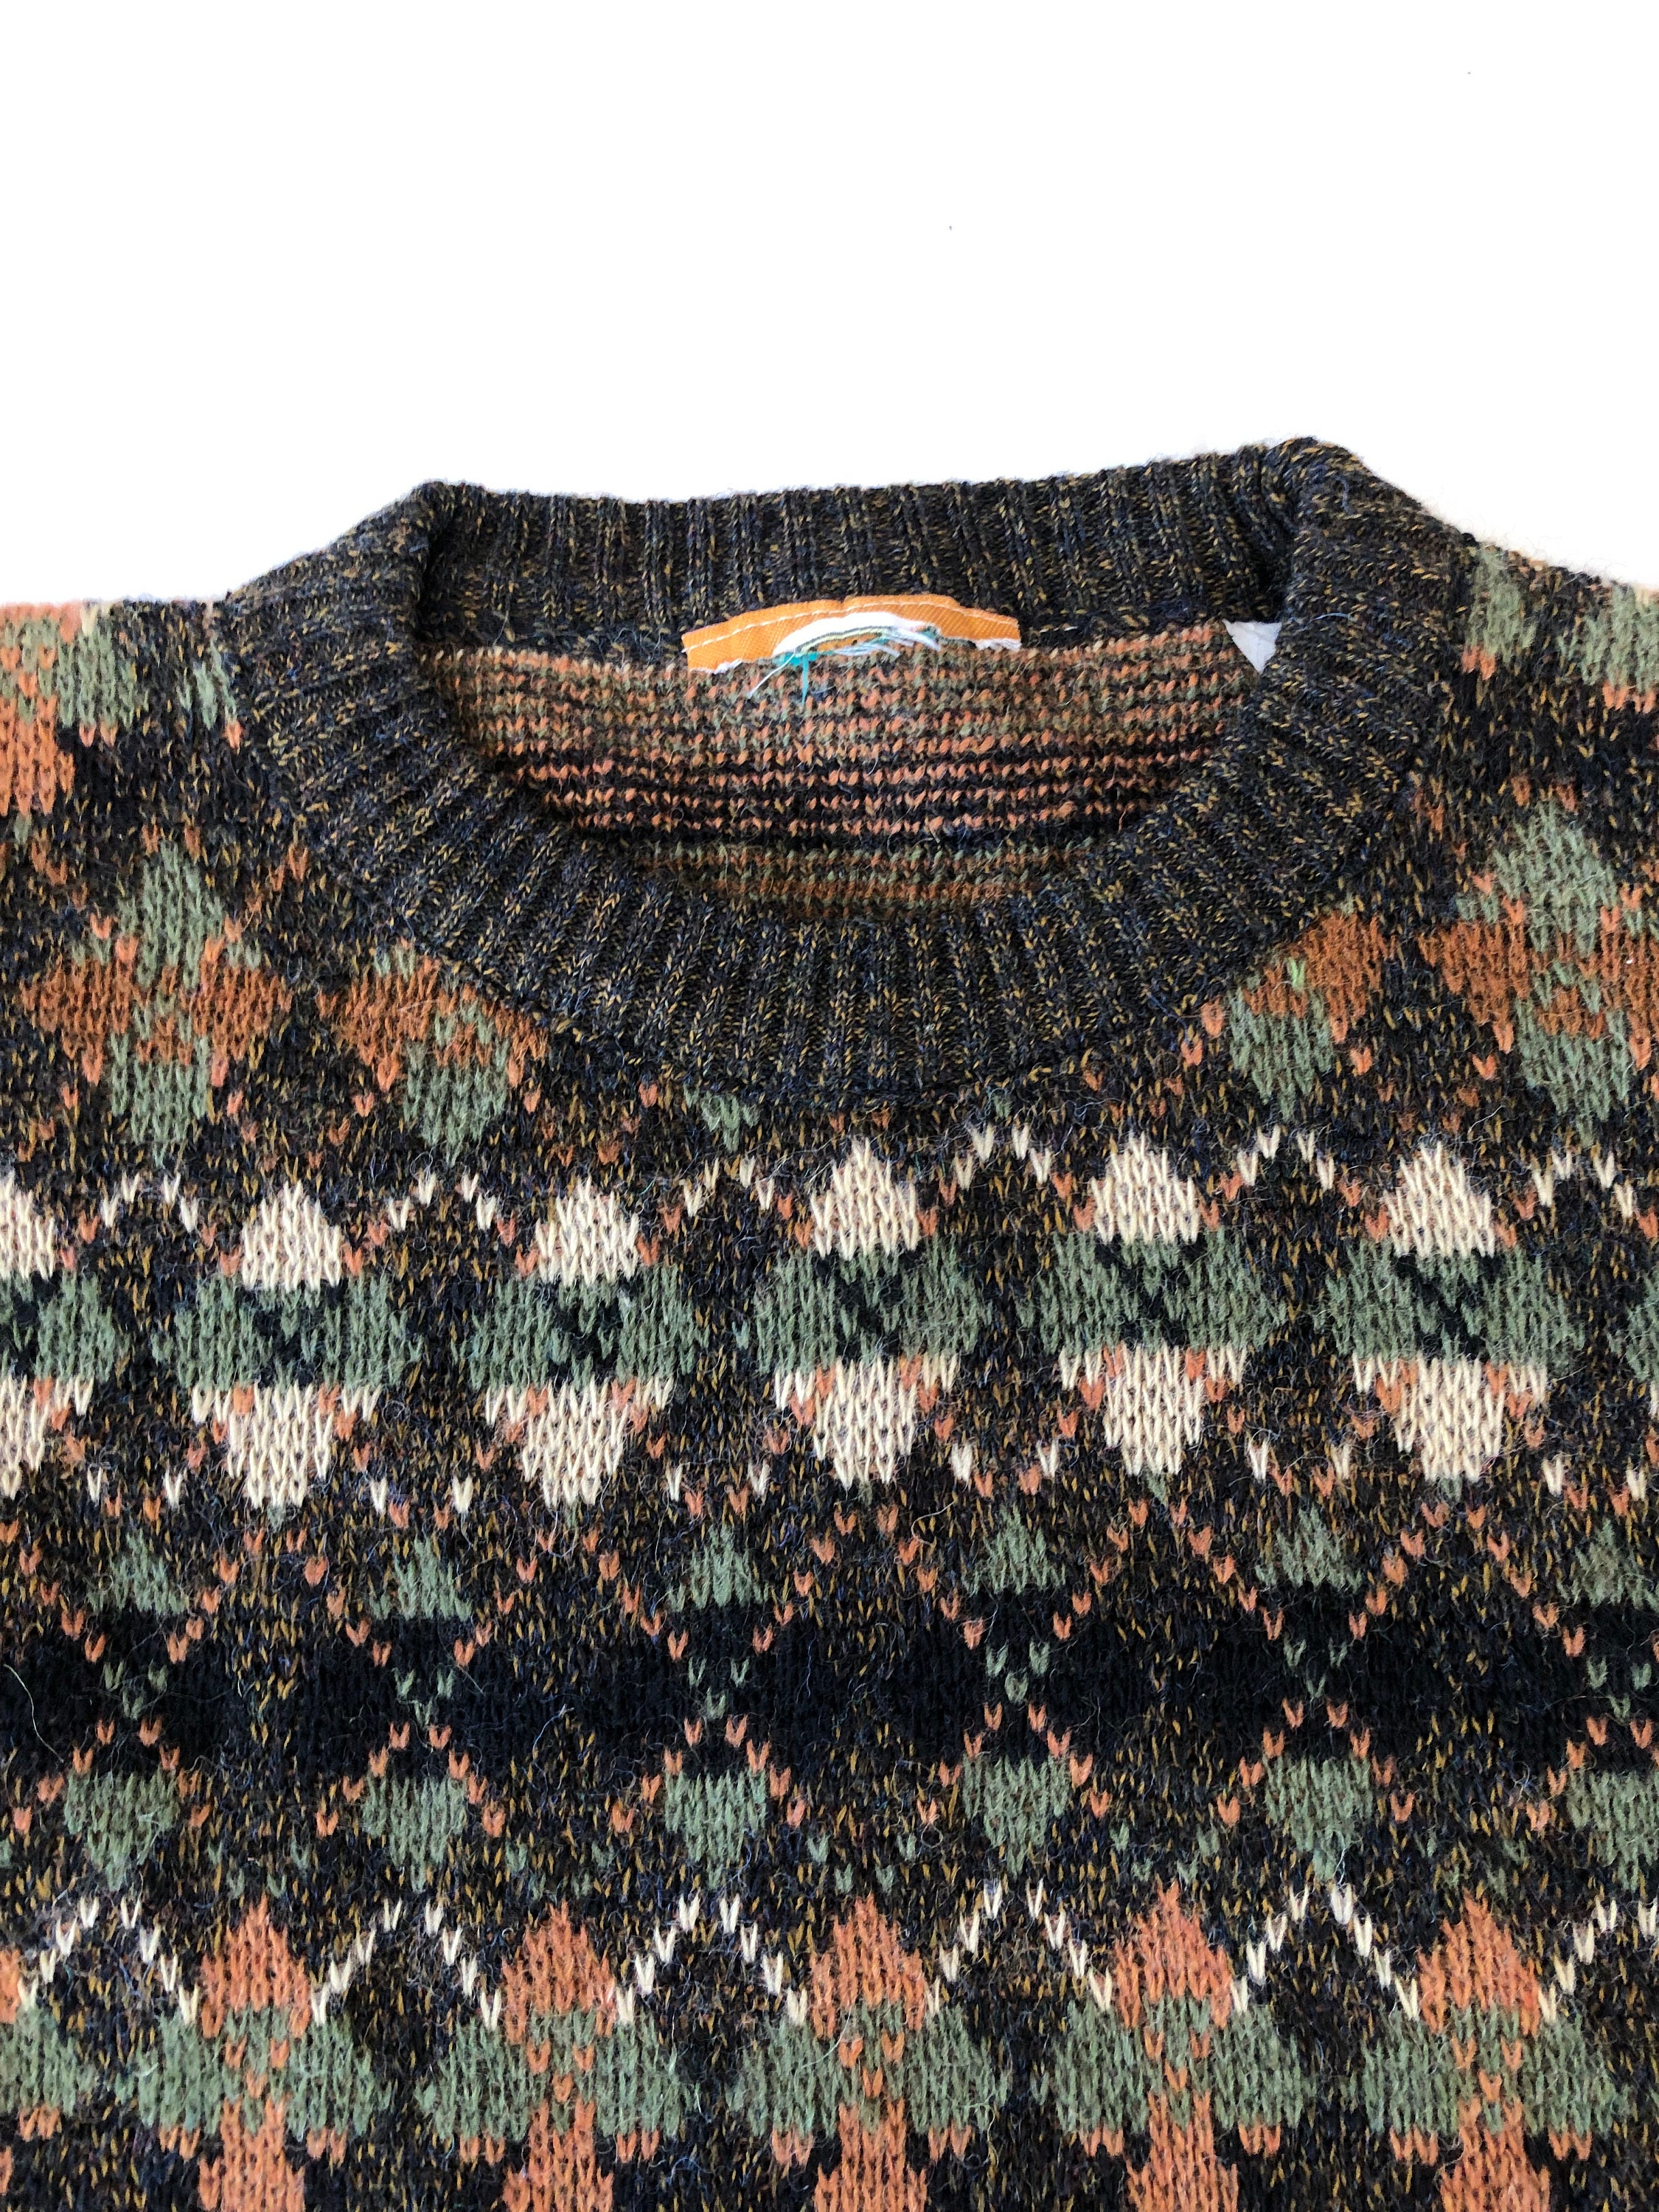 SS20 Jacquard Multi Color Crewneck Pullover Sweater